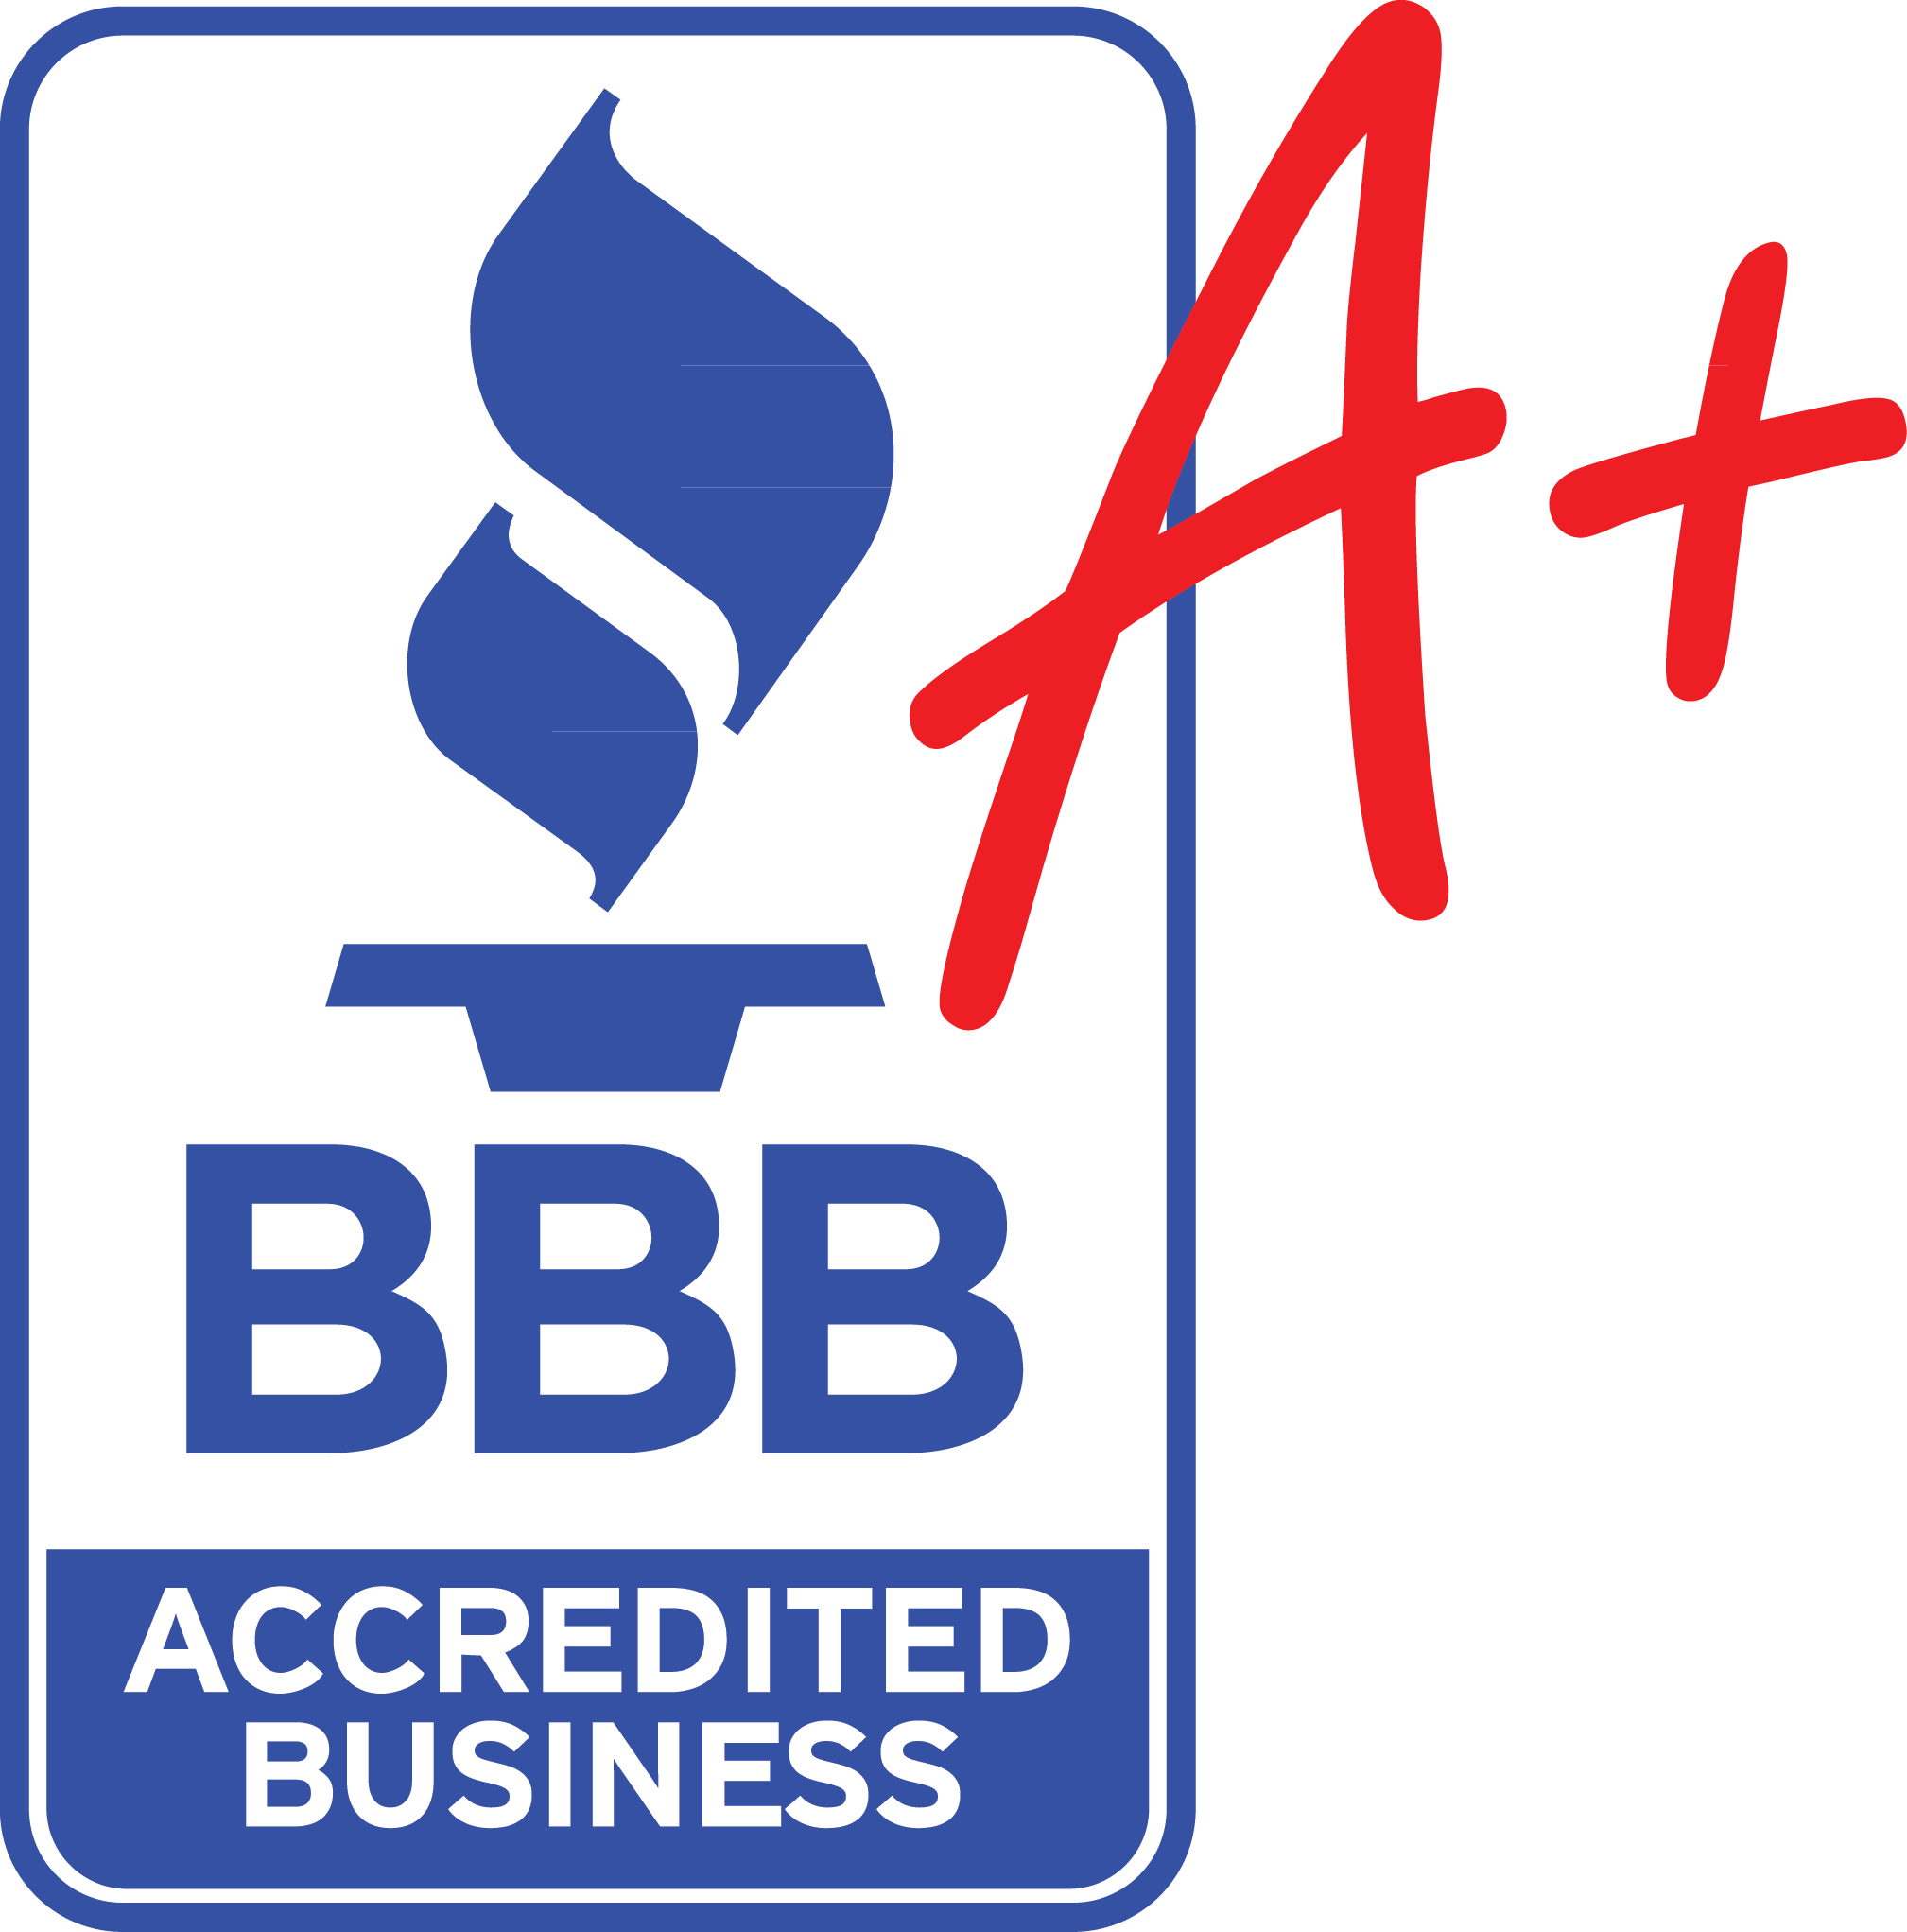 Better Business Bureau Logo - Better Business Accreditation in Indiana | Slone Automotive ...